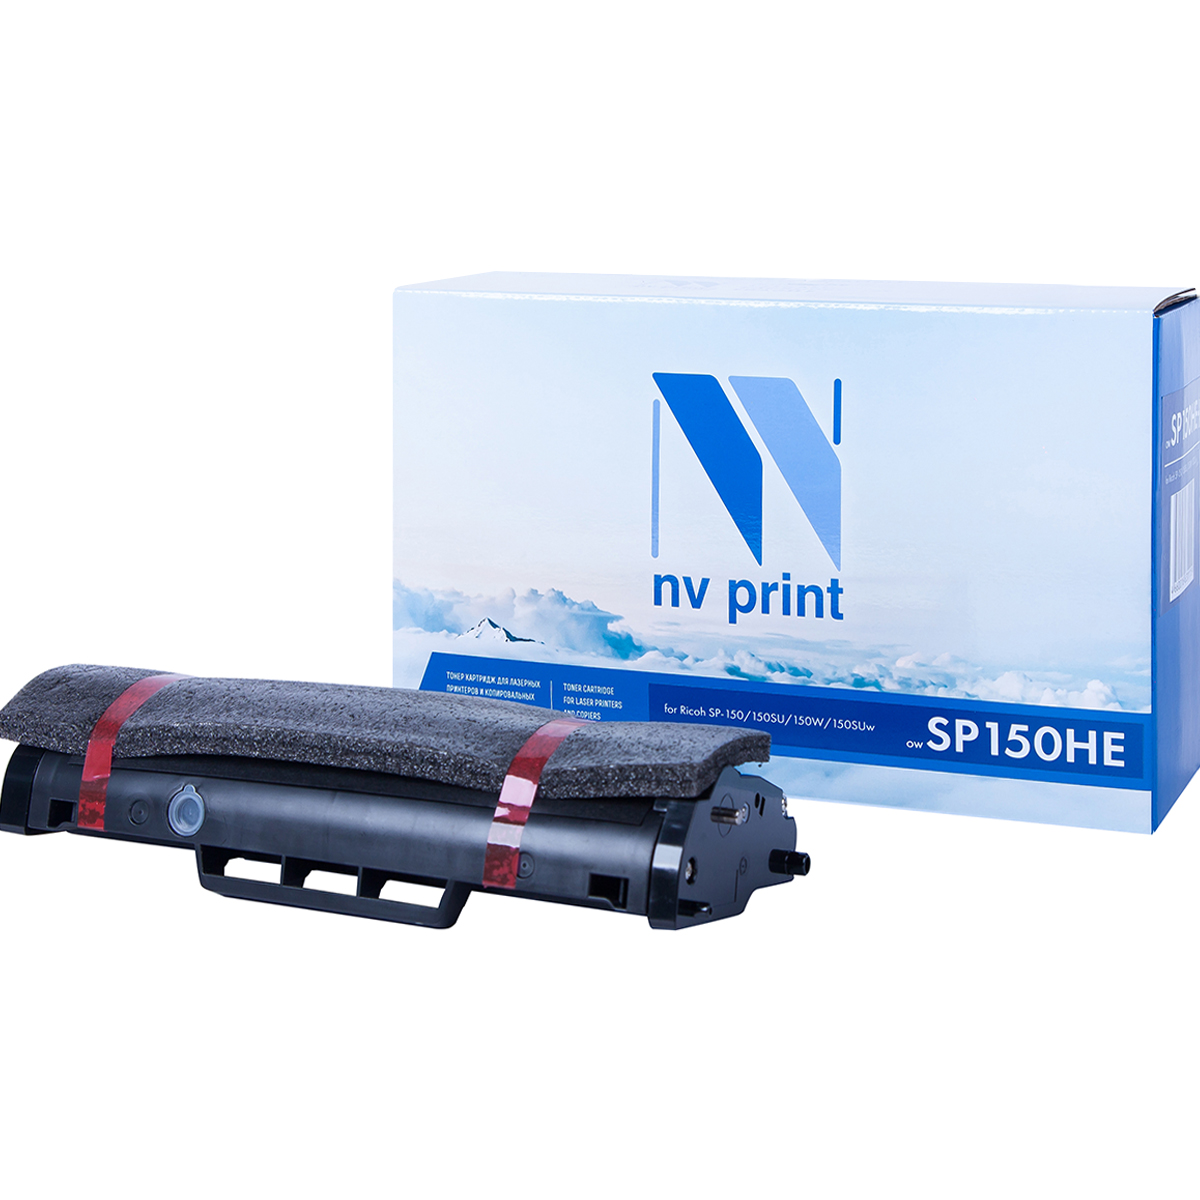 Тонер-картридж NV Print SP150HE для Ricoh SP-150/150SU/150W/150SUw (1500k)